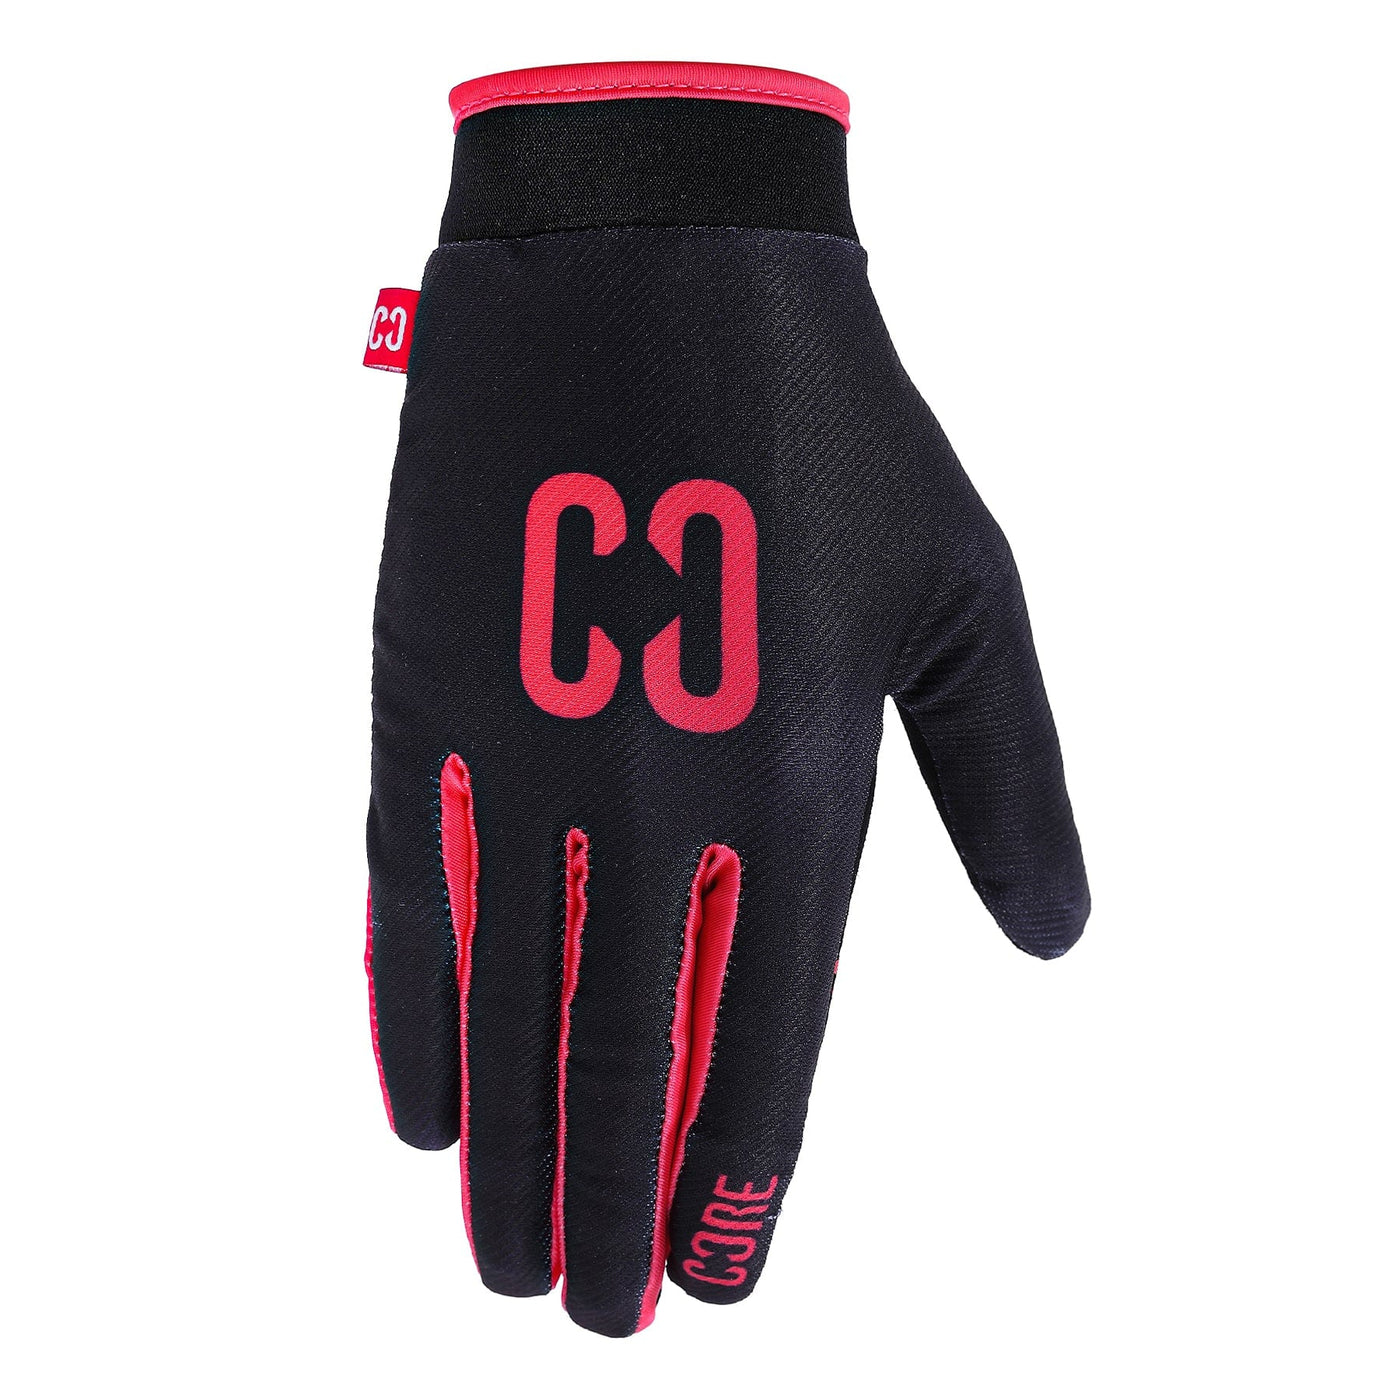 CORE Protection Aero Skateboard Gloves Accent Pink I Skateboarding Gloves